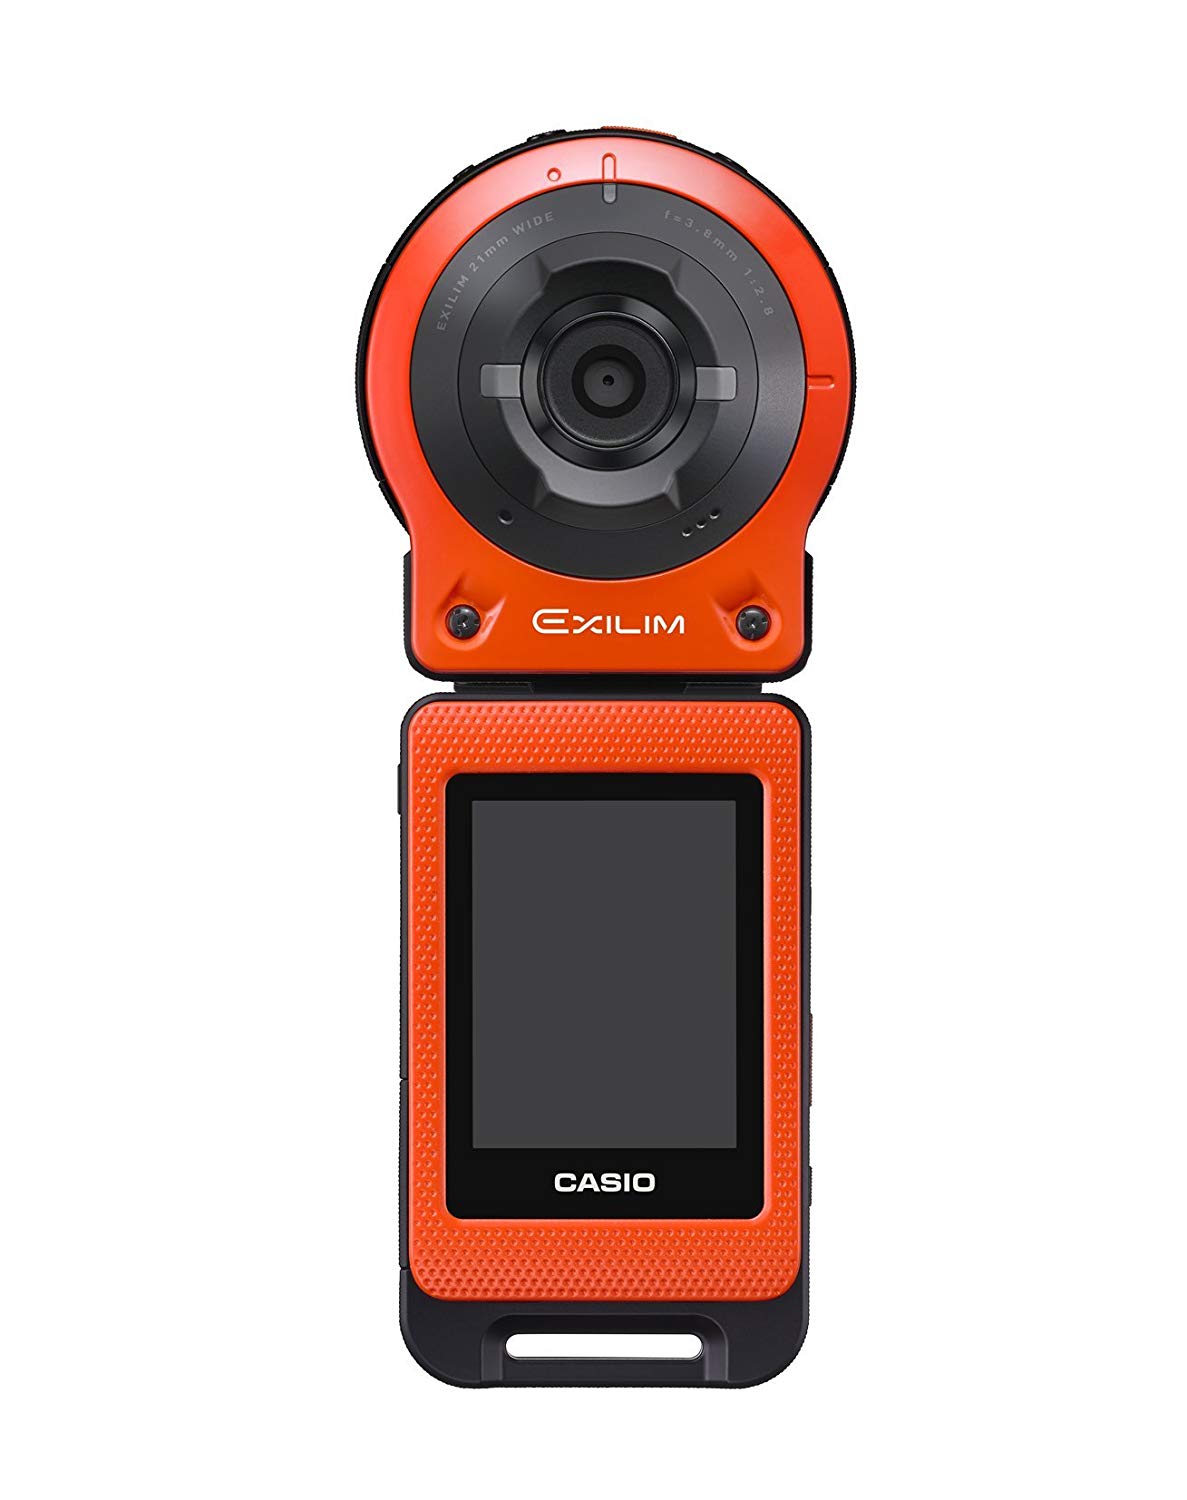 CASIO EX-FR10 EXILIM Digital Action Camera 14.1 MP - Orange - 64GB MicroSD - Case - Cleaning Kit - Tripod - Monopod 70